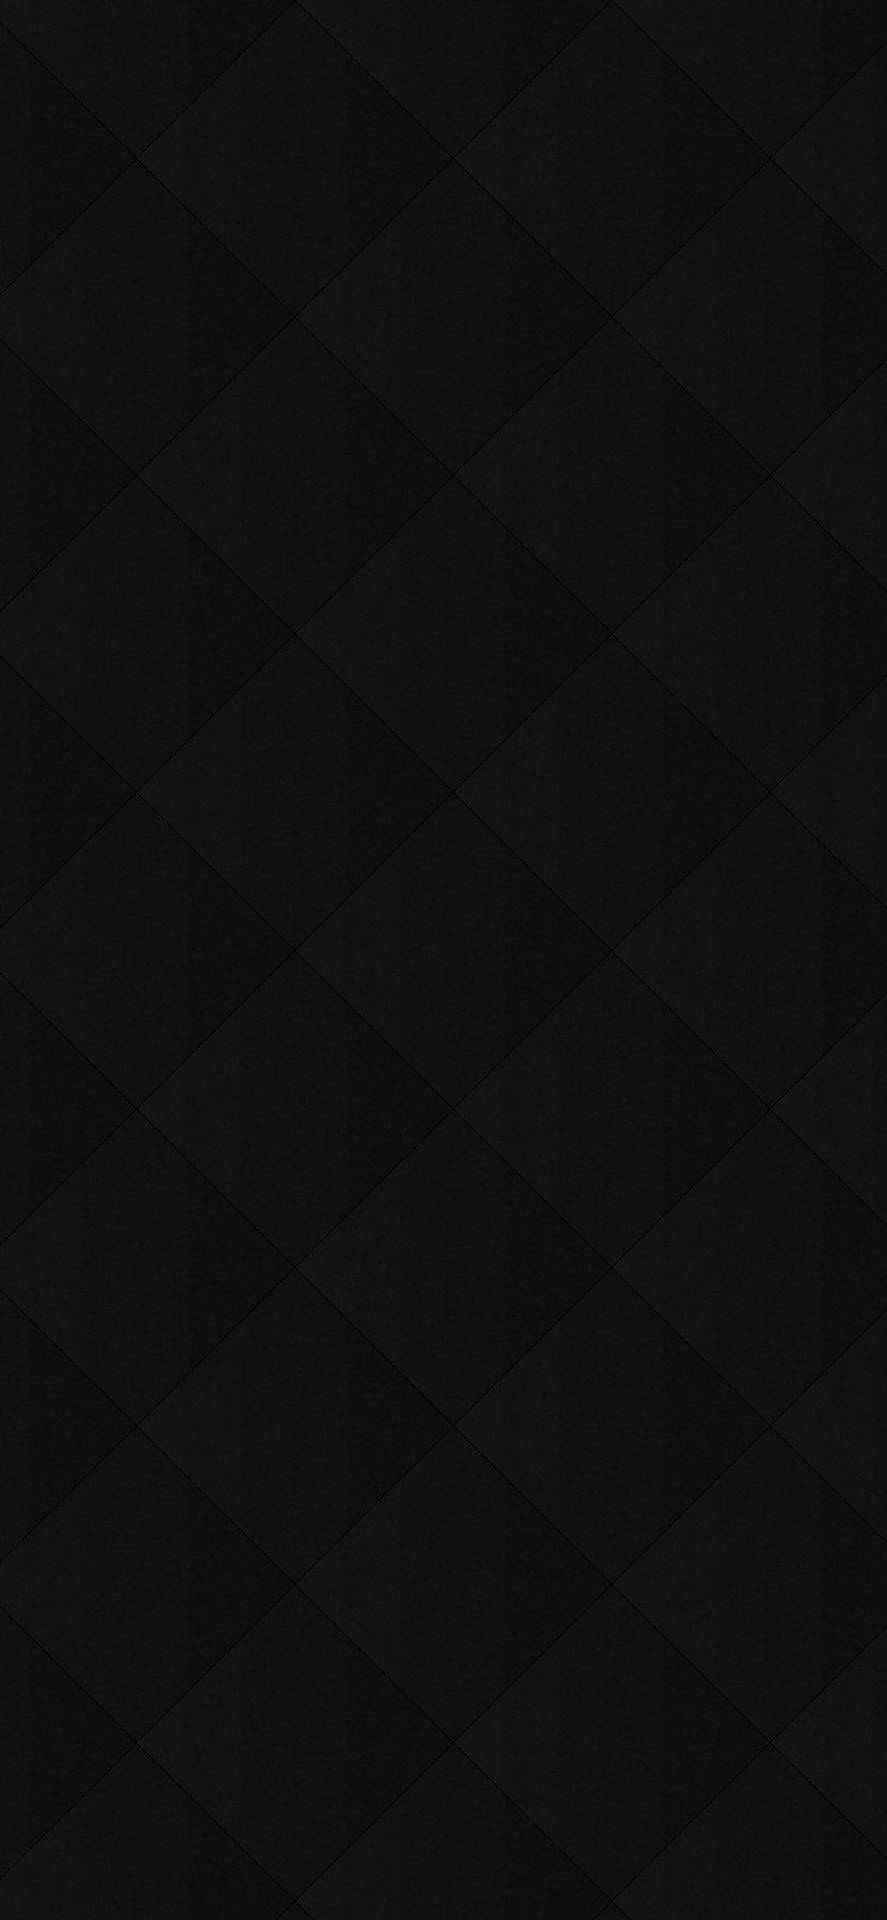 Plain Black iPhone Squares Wallpaper